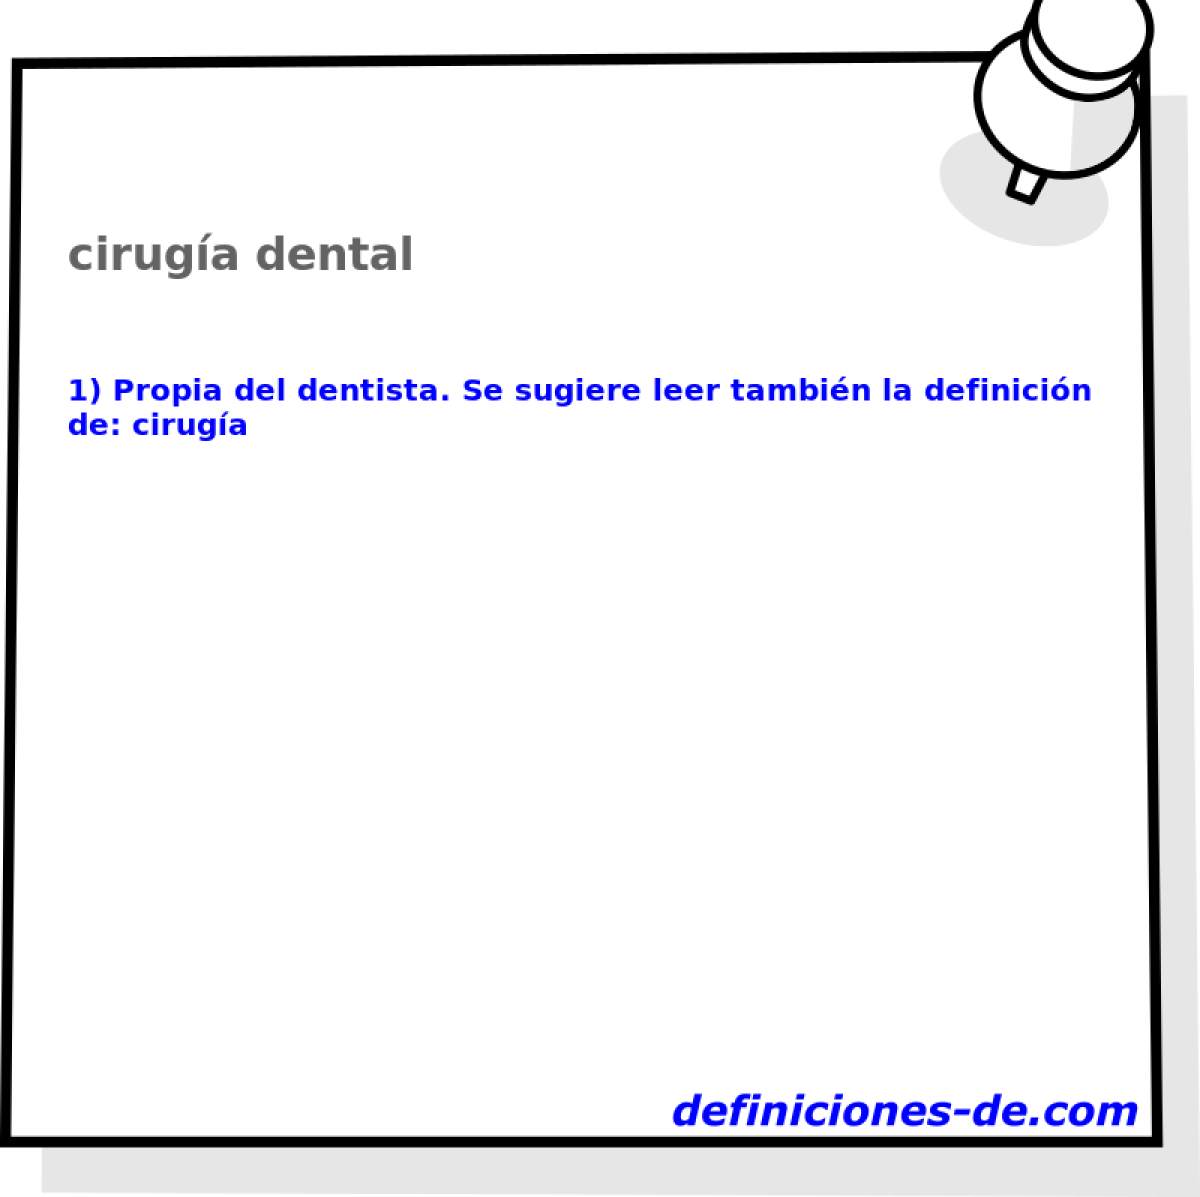 ciruga dental 